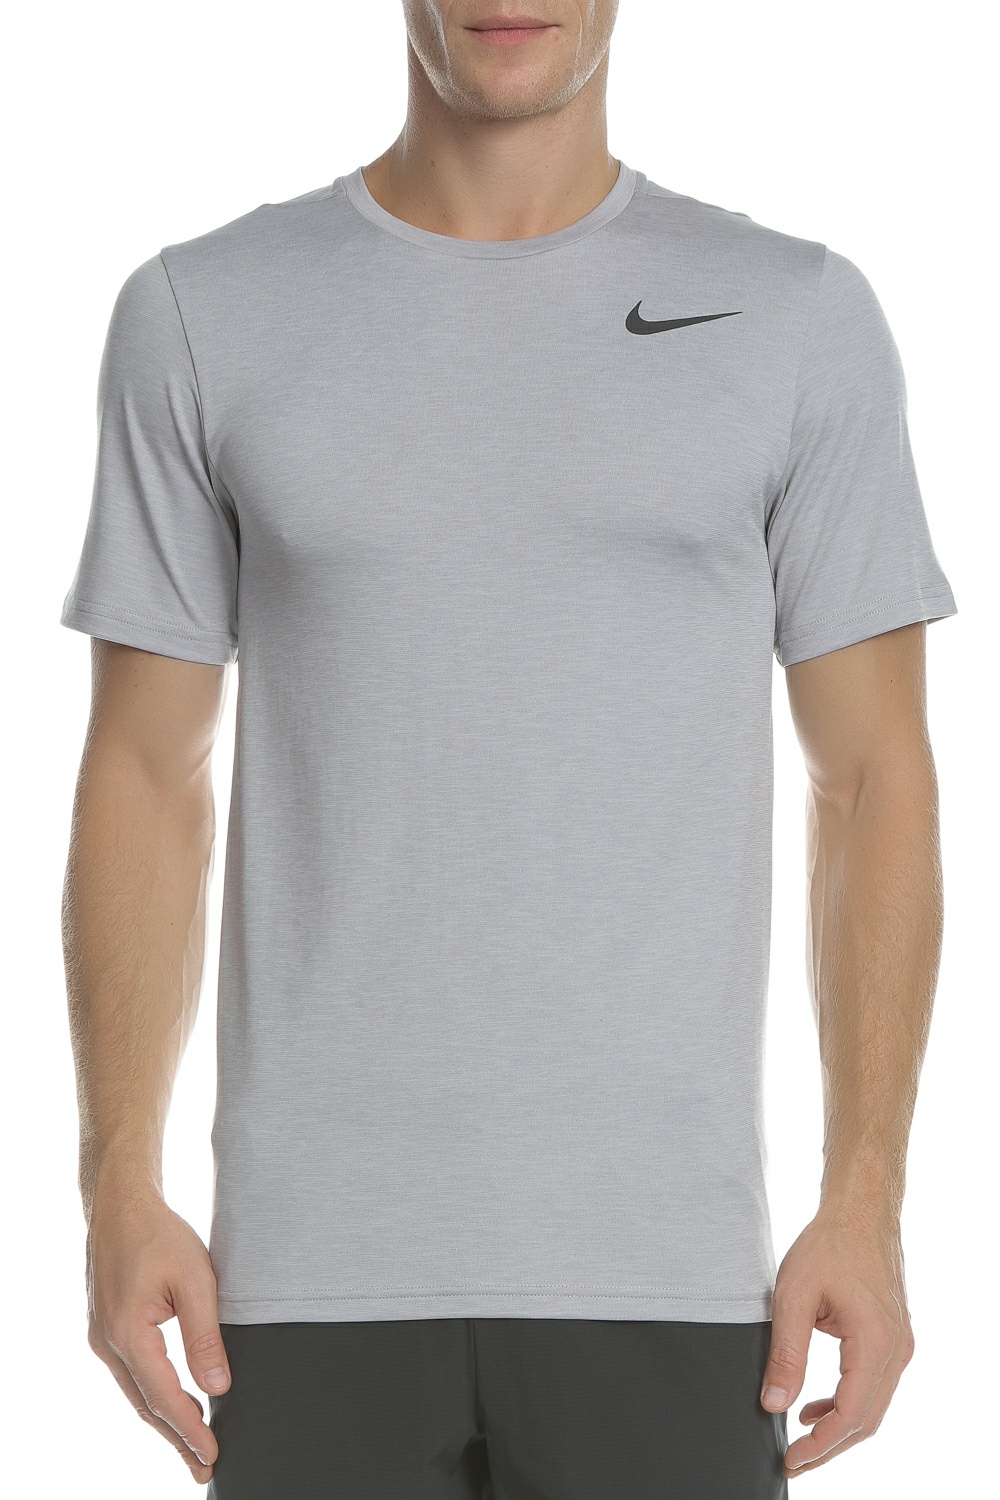 NIKE - Κοντομάνικη μπλούζα NIKE BREATHE γκρι Ανδρικά/Ρούχα/Αθλητικά/T-shirt